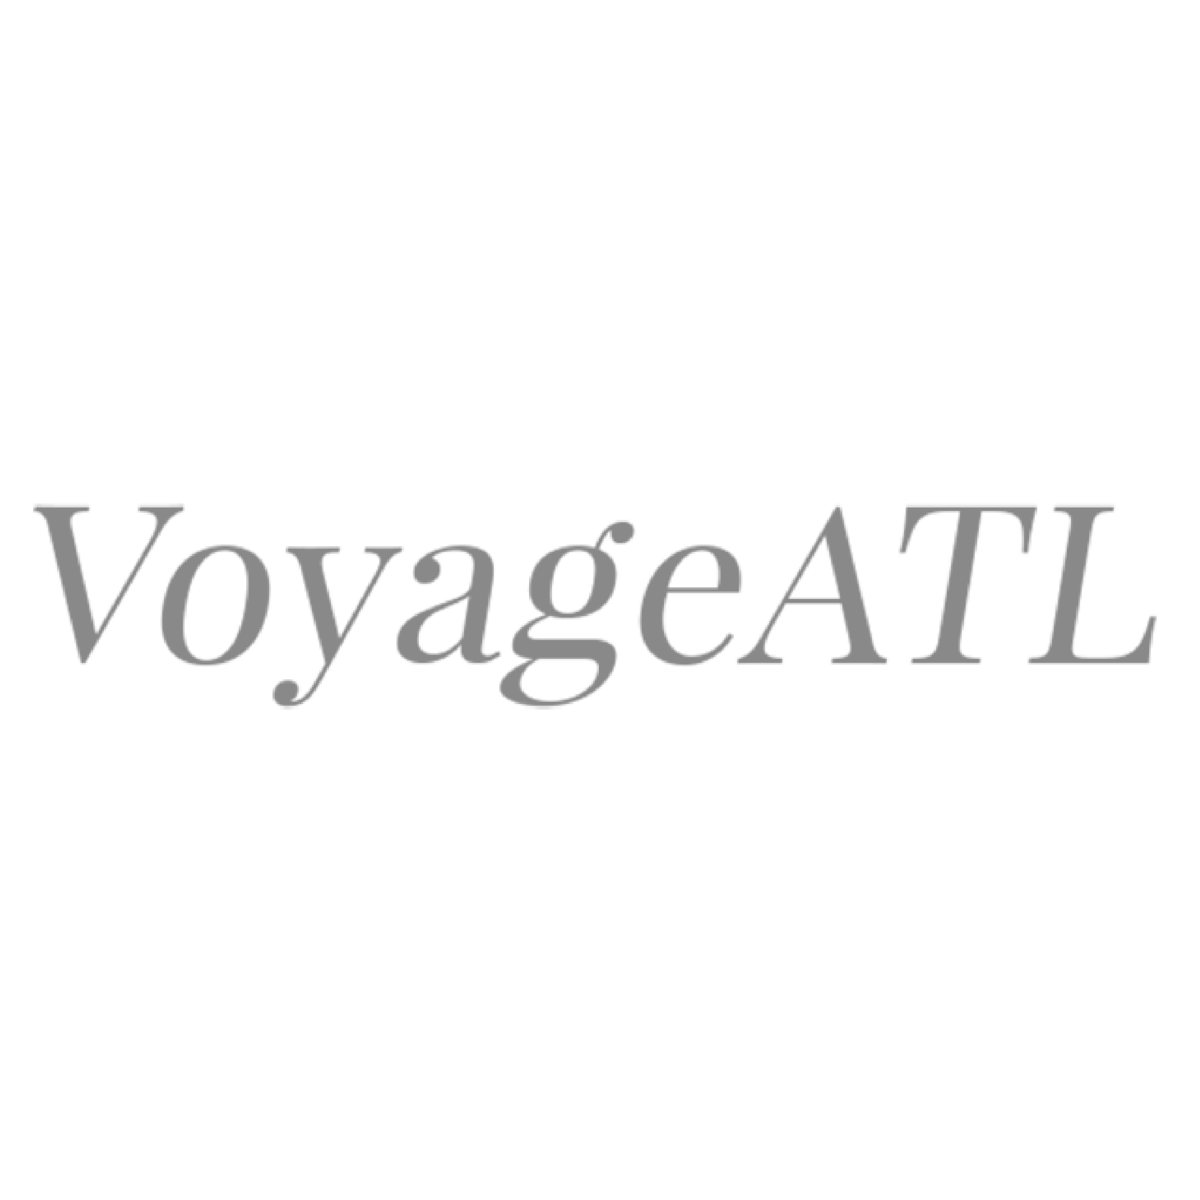 VoyageATL_Logo